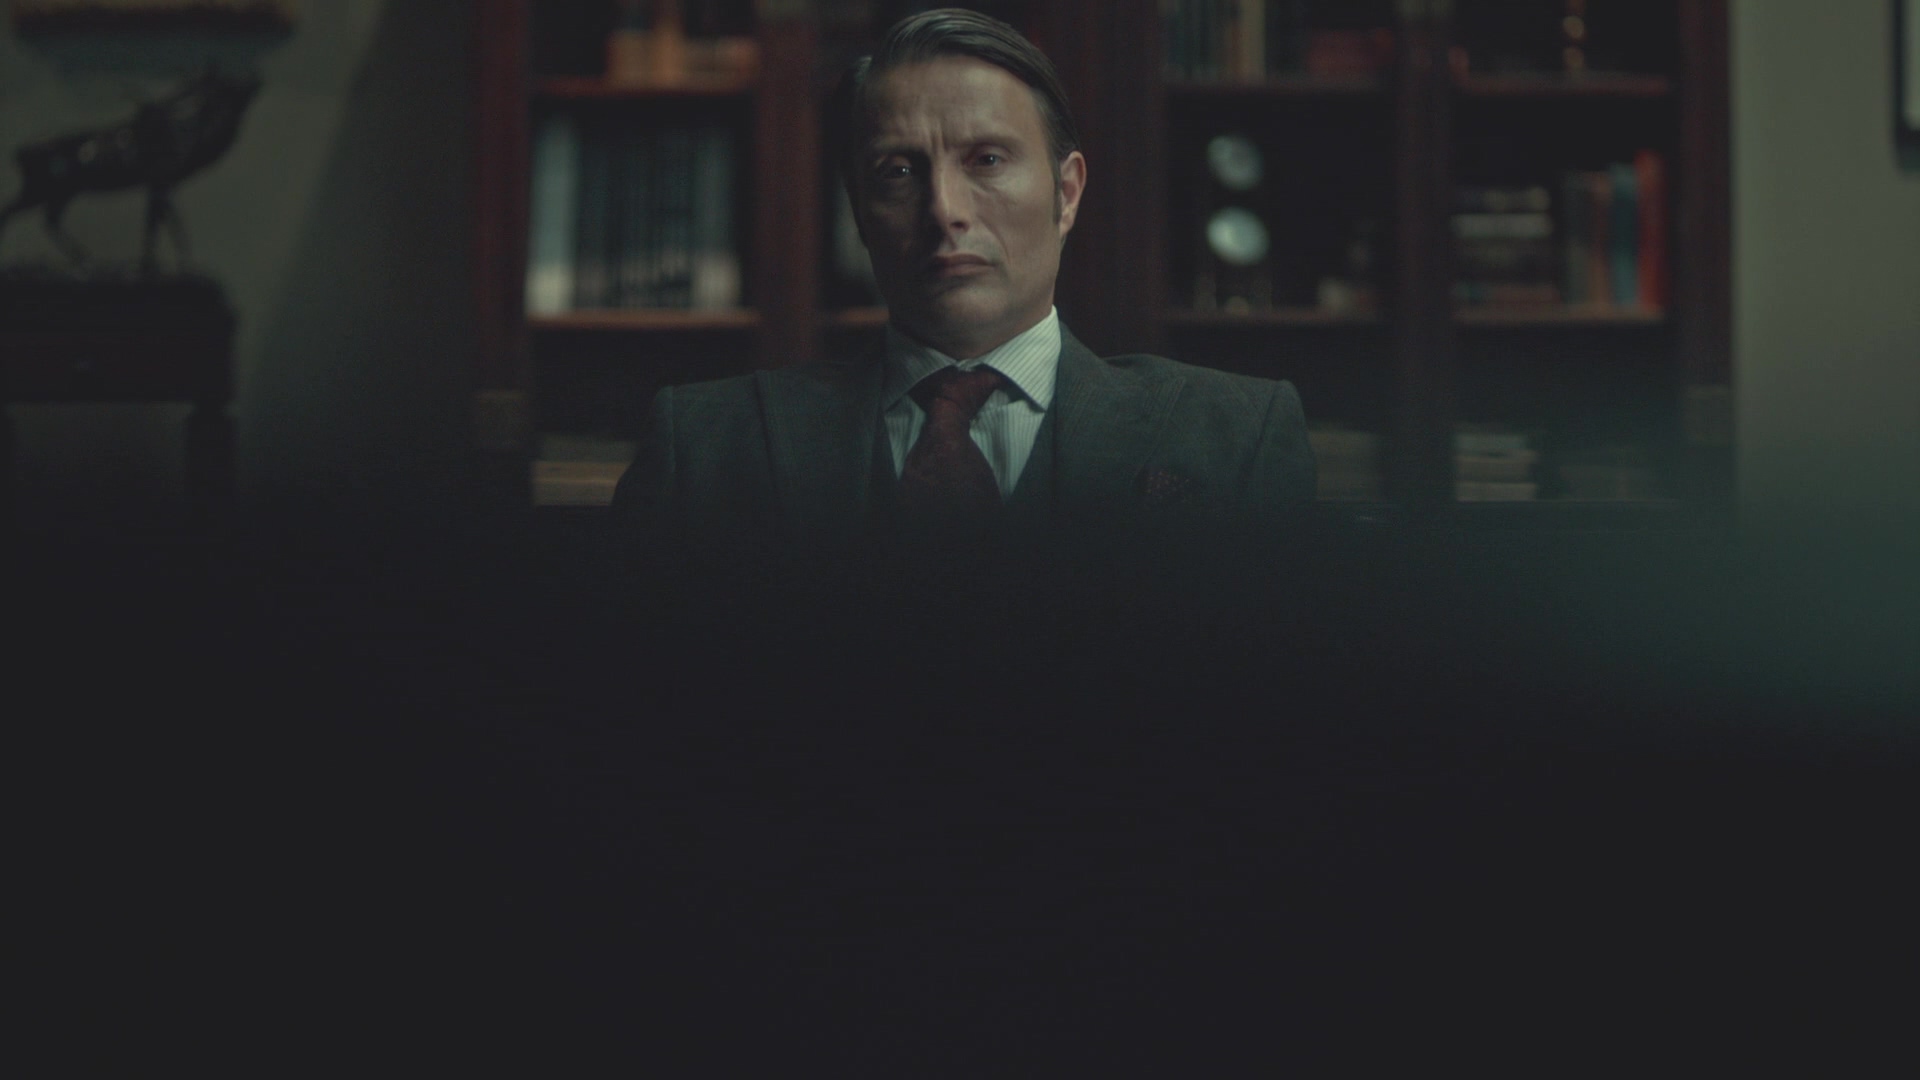 [汉尼拔].Hannibal.S02D02.2014.BluRay.1080p.AVC.DTS-HD.MA.5.1-dislike@HDSky   45.92G-13.jpg